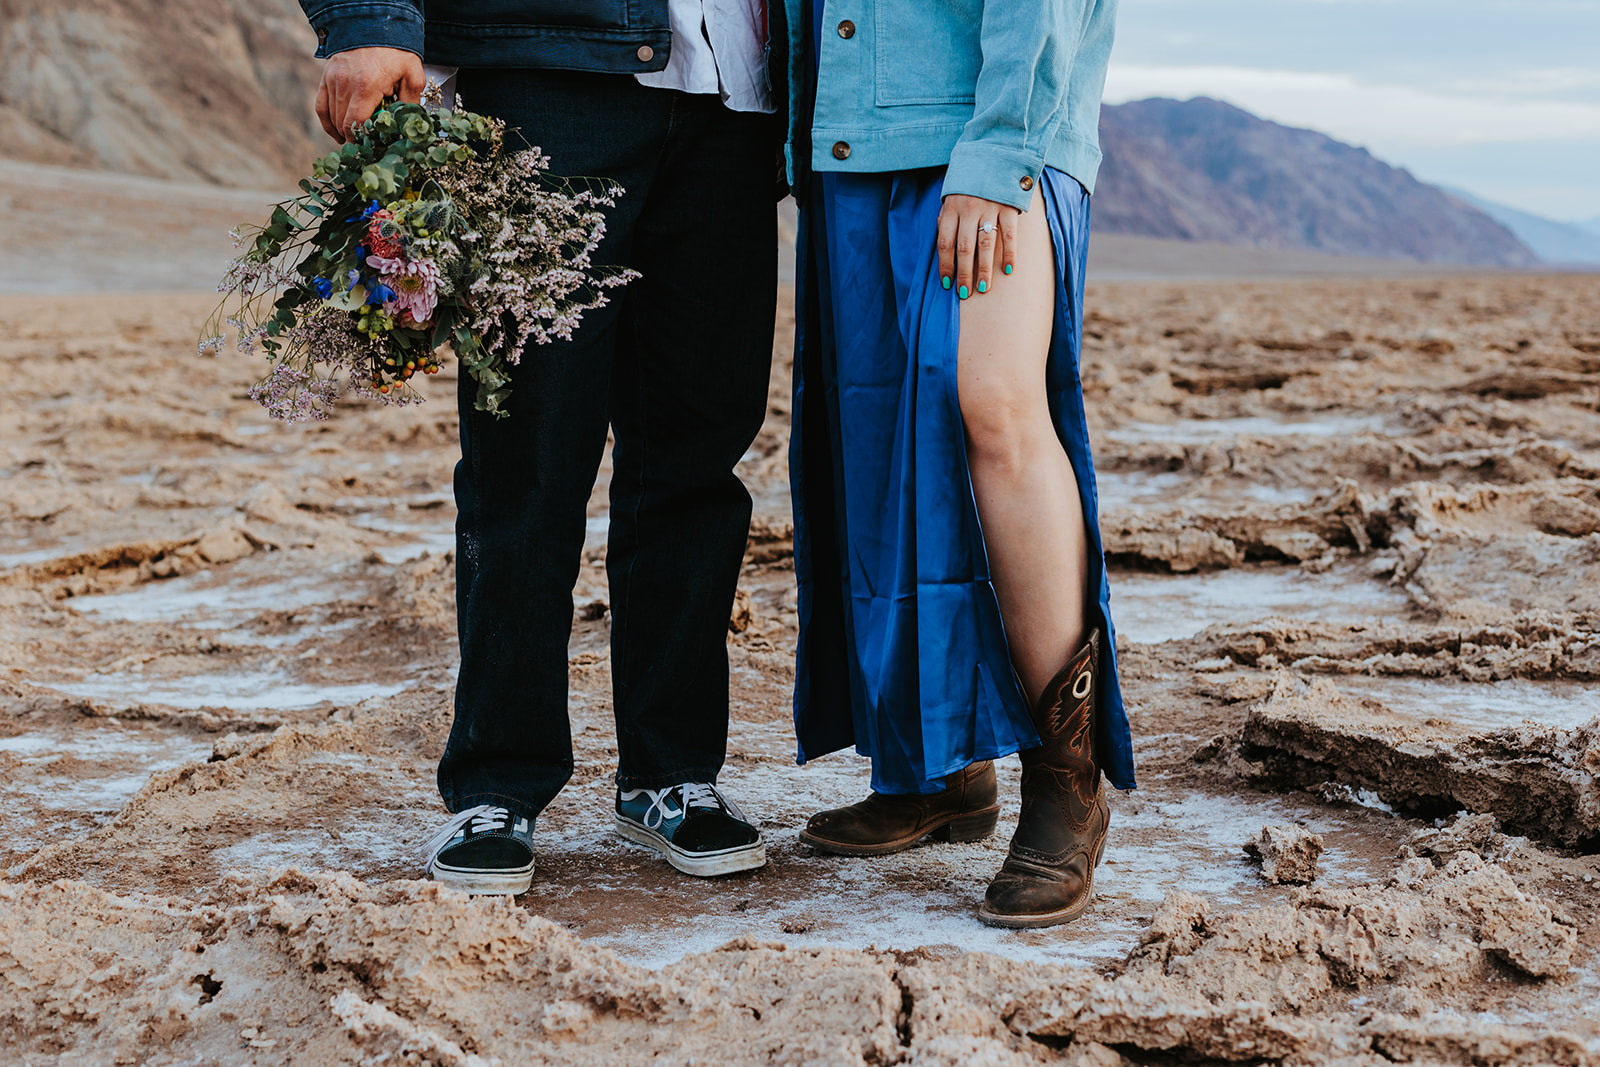 Engagement photos at Artist's Palette, Death Valley National Park